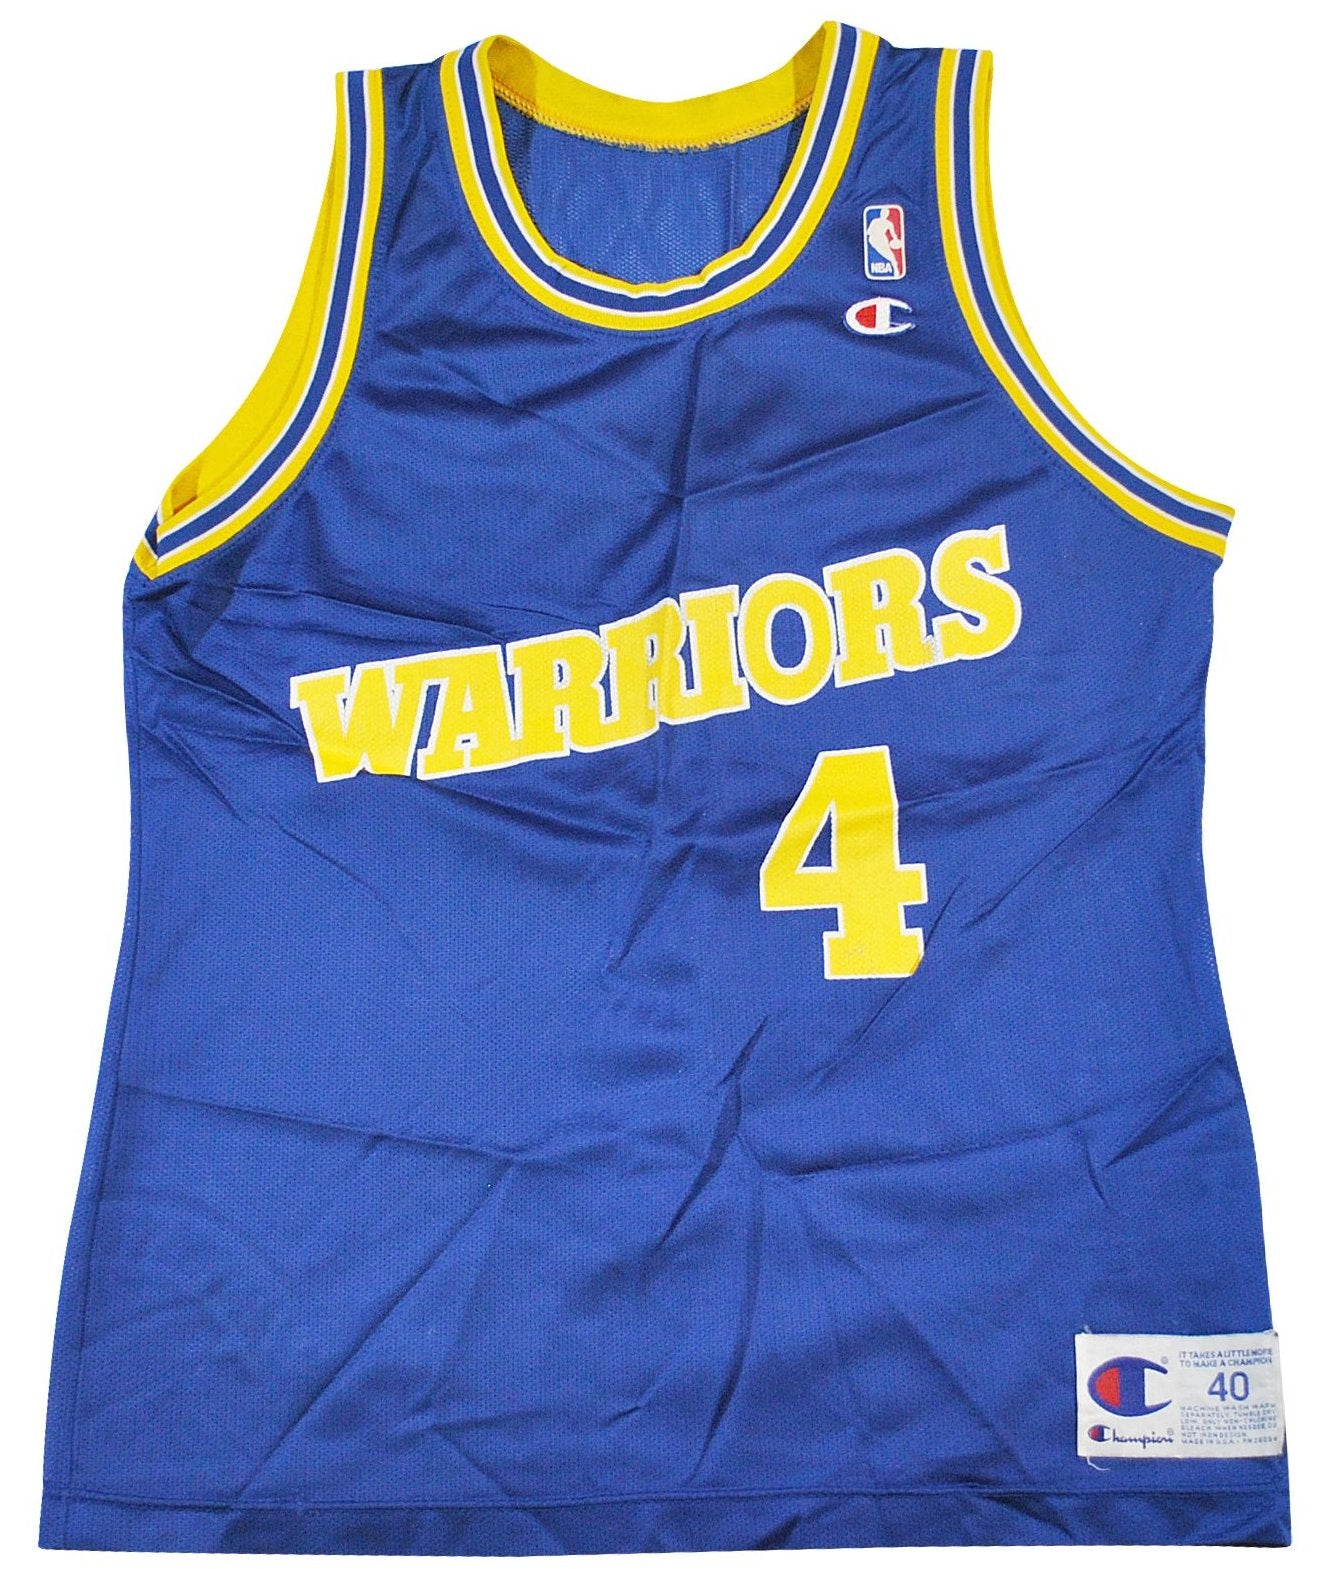 Vintage NBA Golden State Warriors Jersey